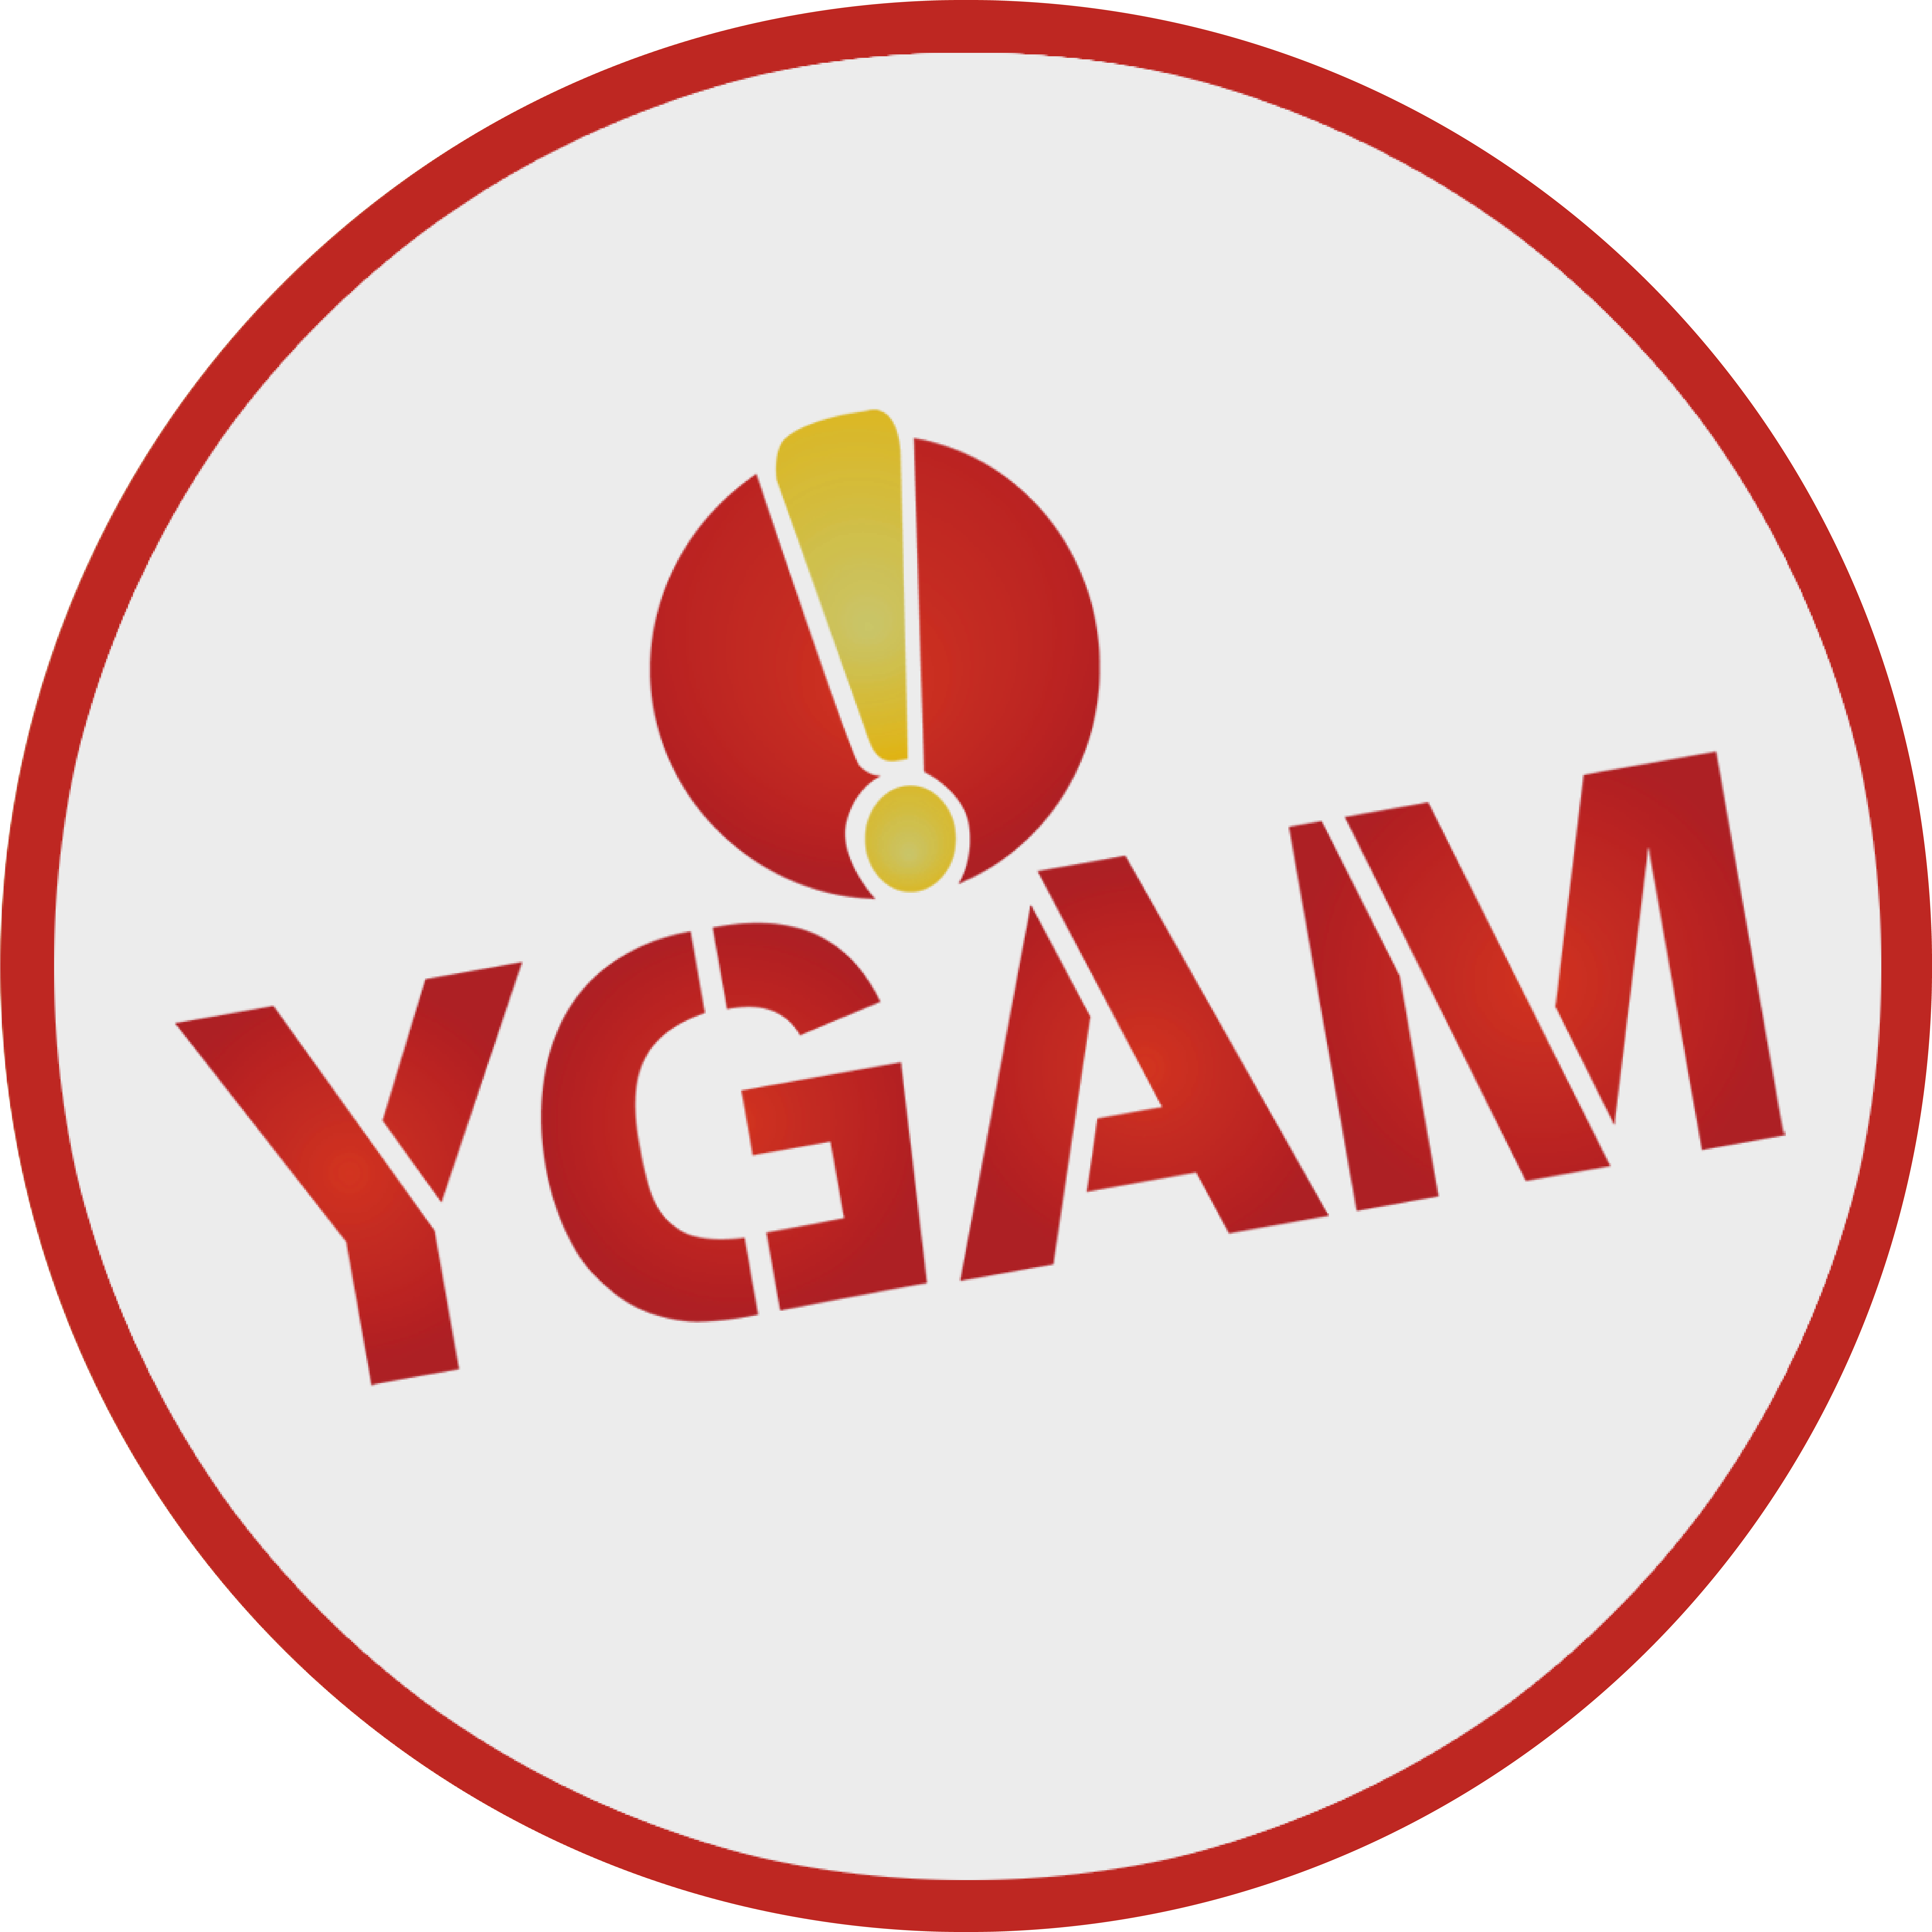 YGAM logo